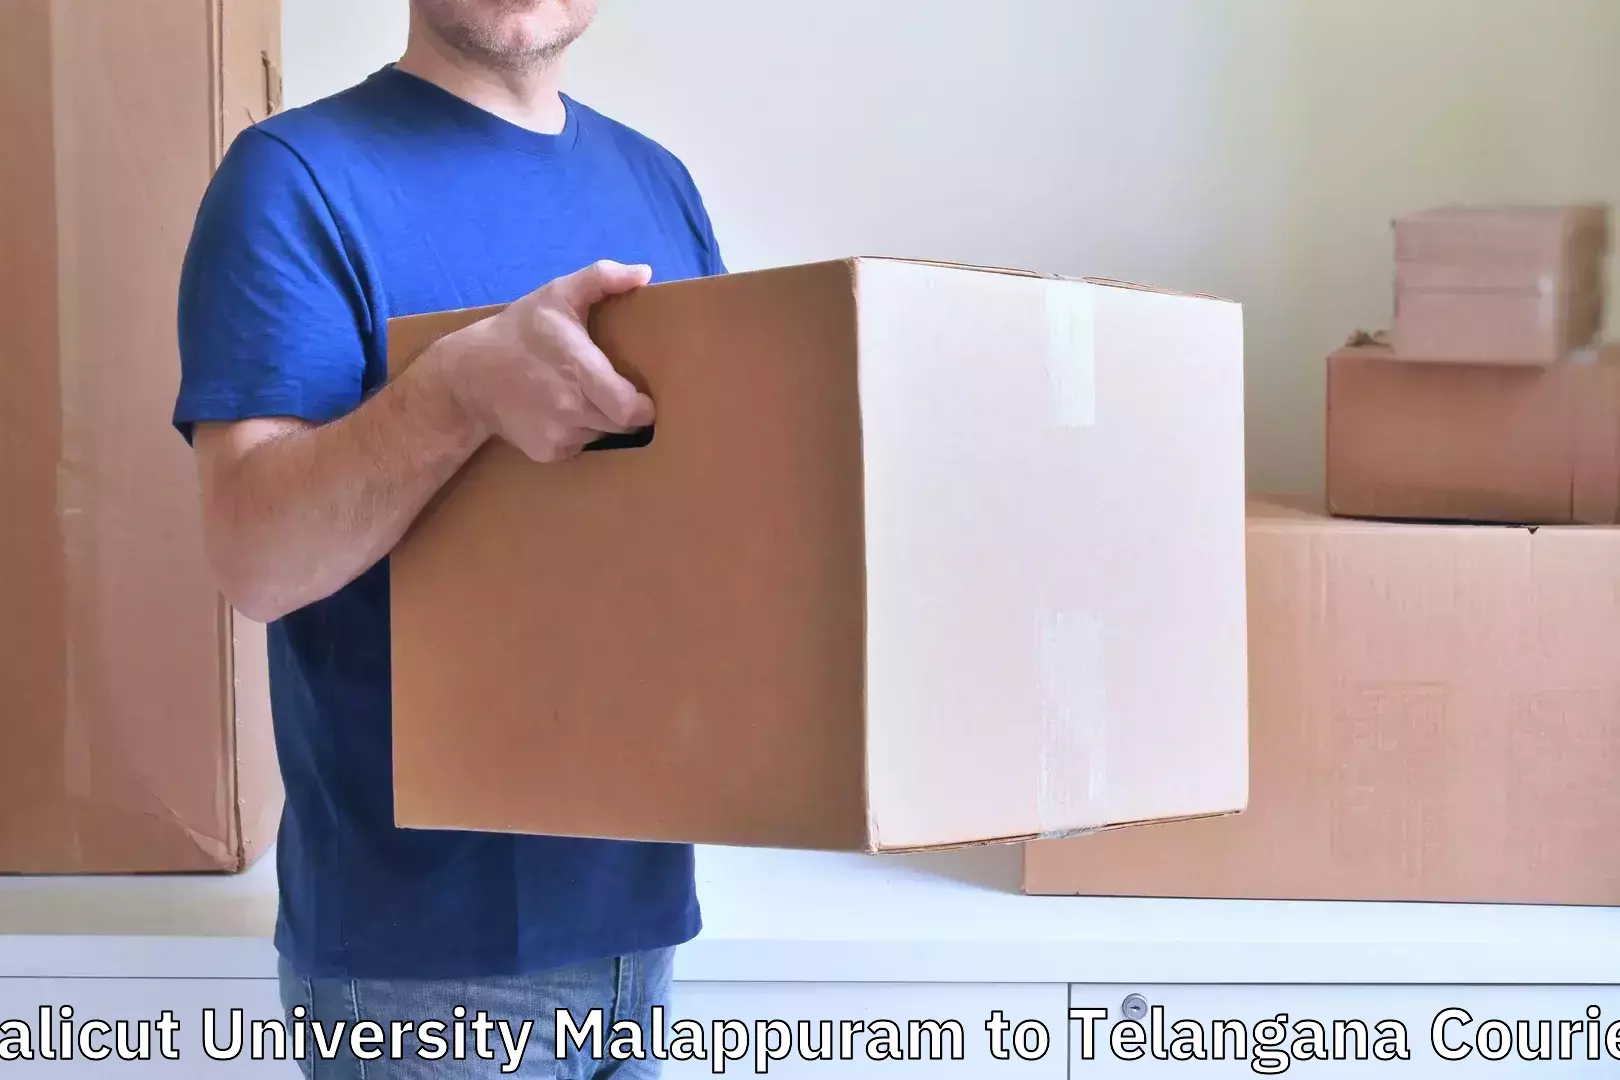 Baggage shipping schedule Calicut University Malappuram to Sircilla